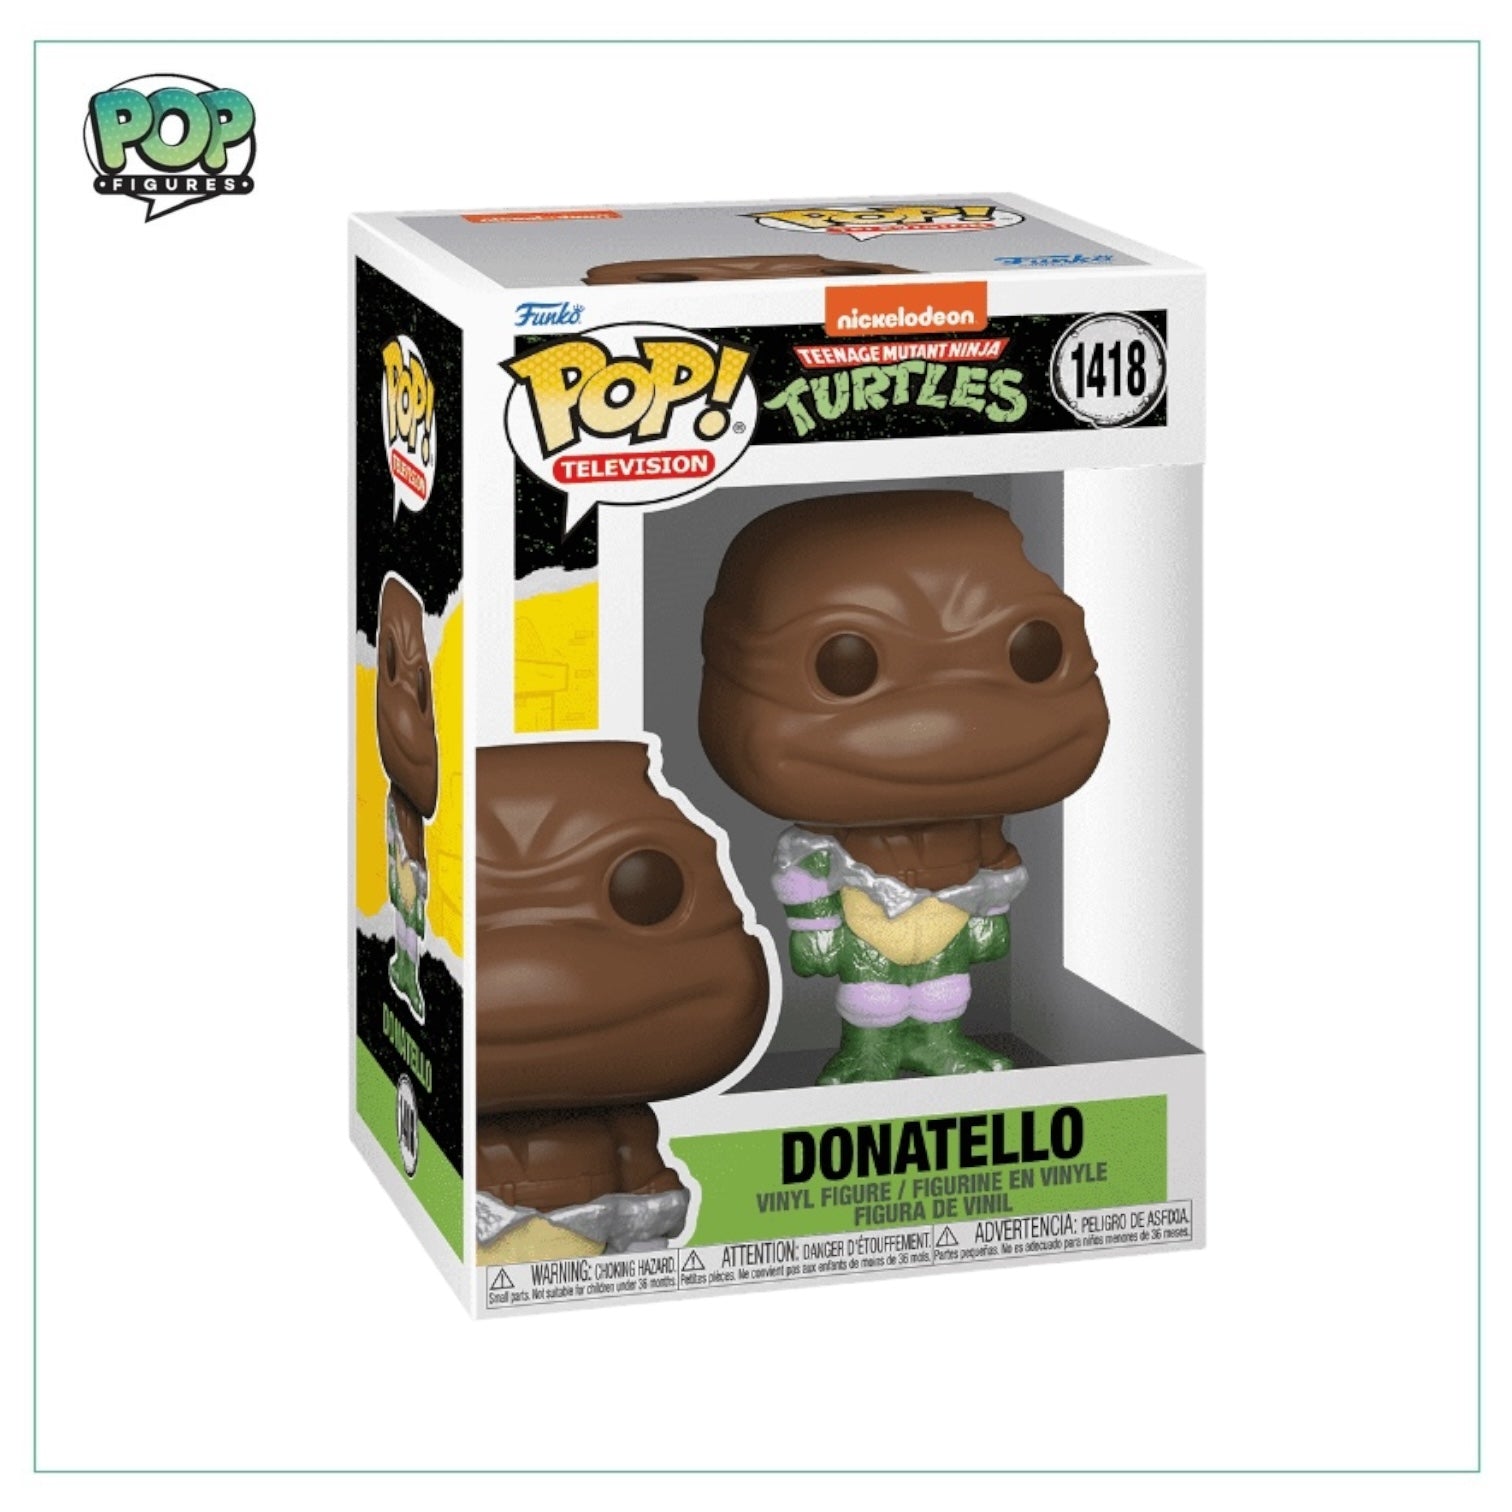 Donatello (Chocolate) #1418 Funko Pop! - Teenage Mutant Ninja Turtles